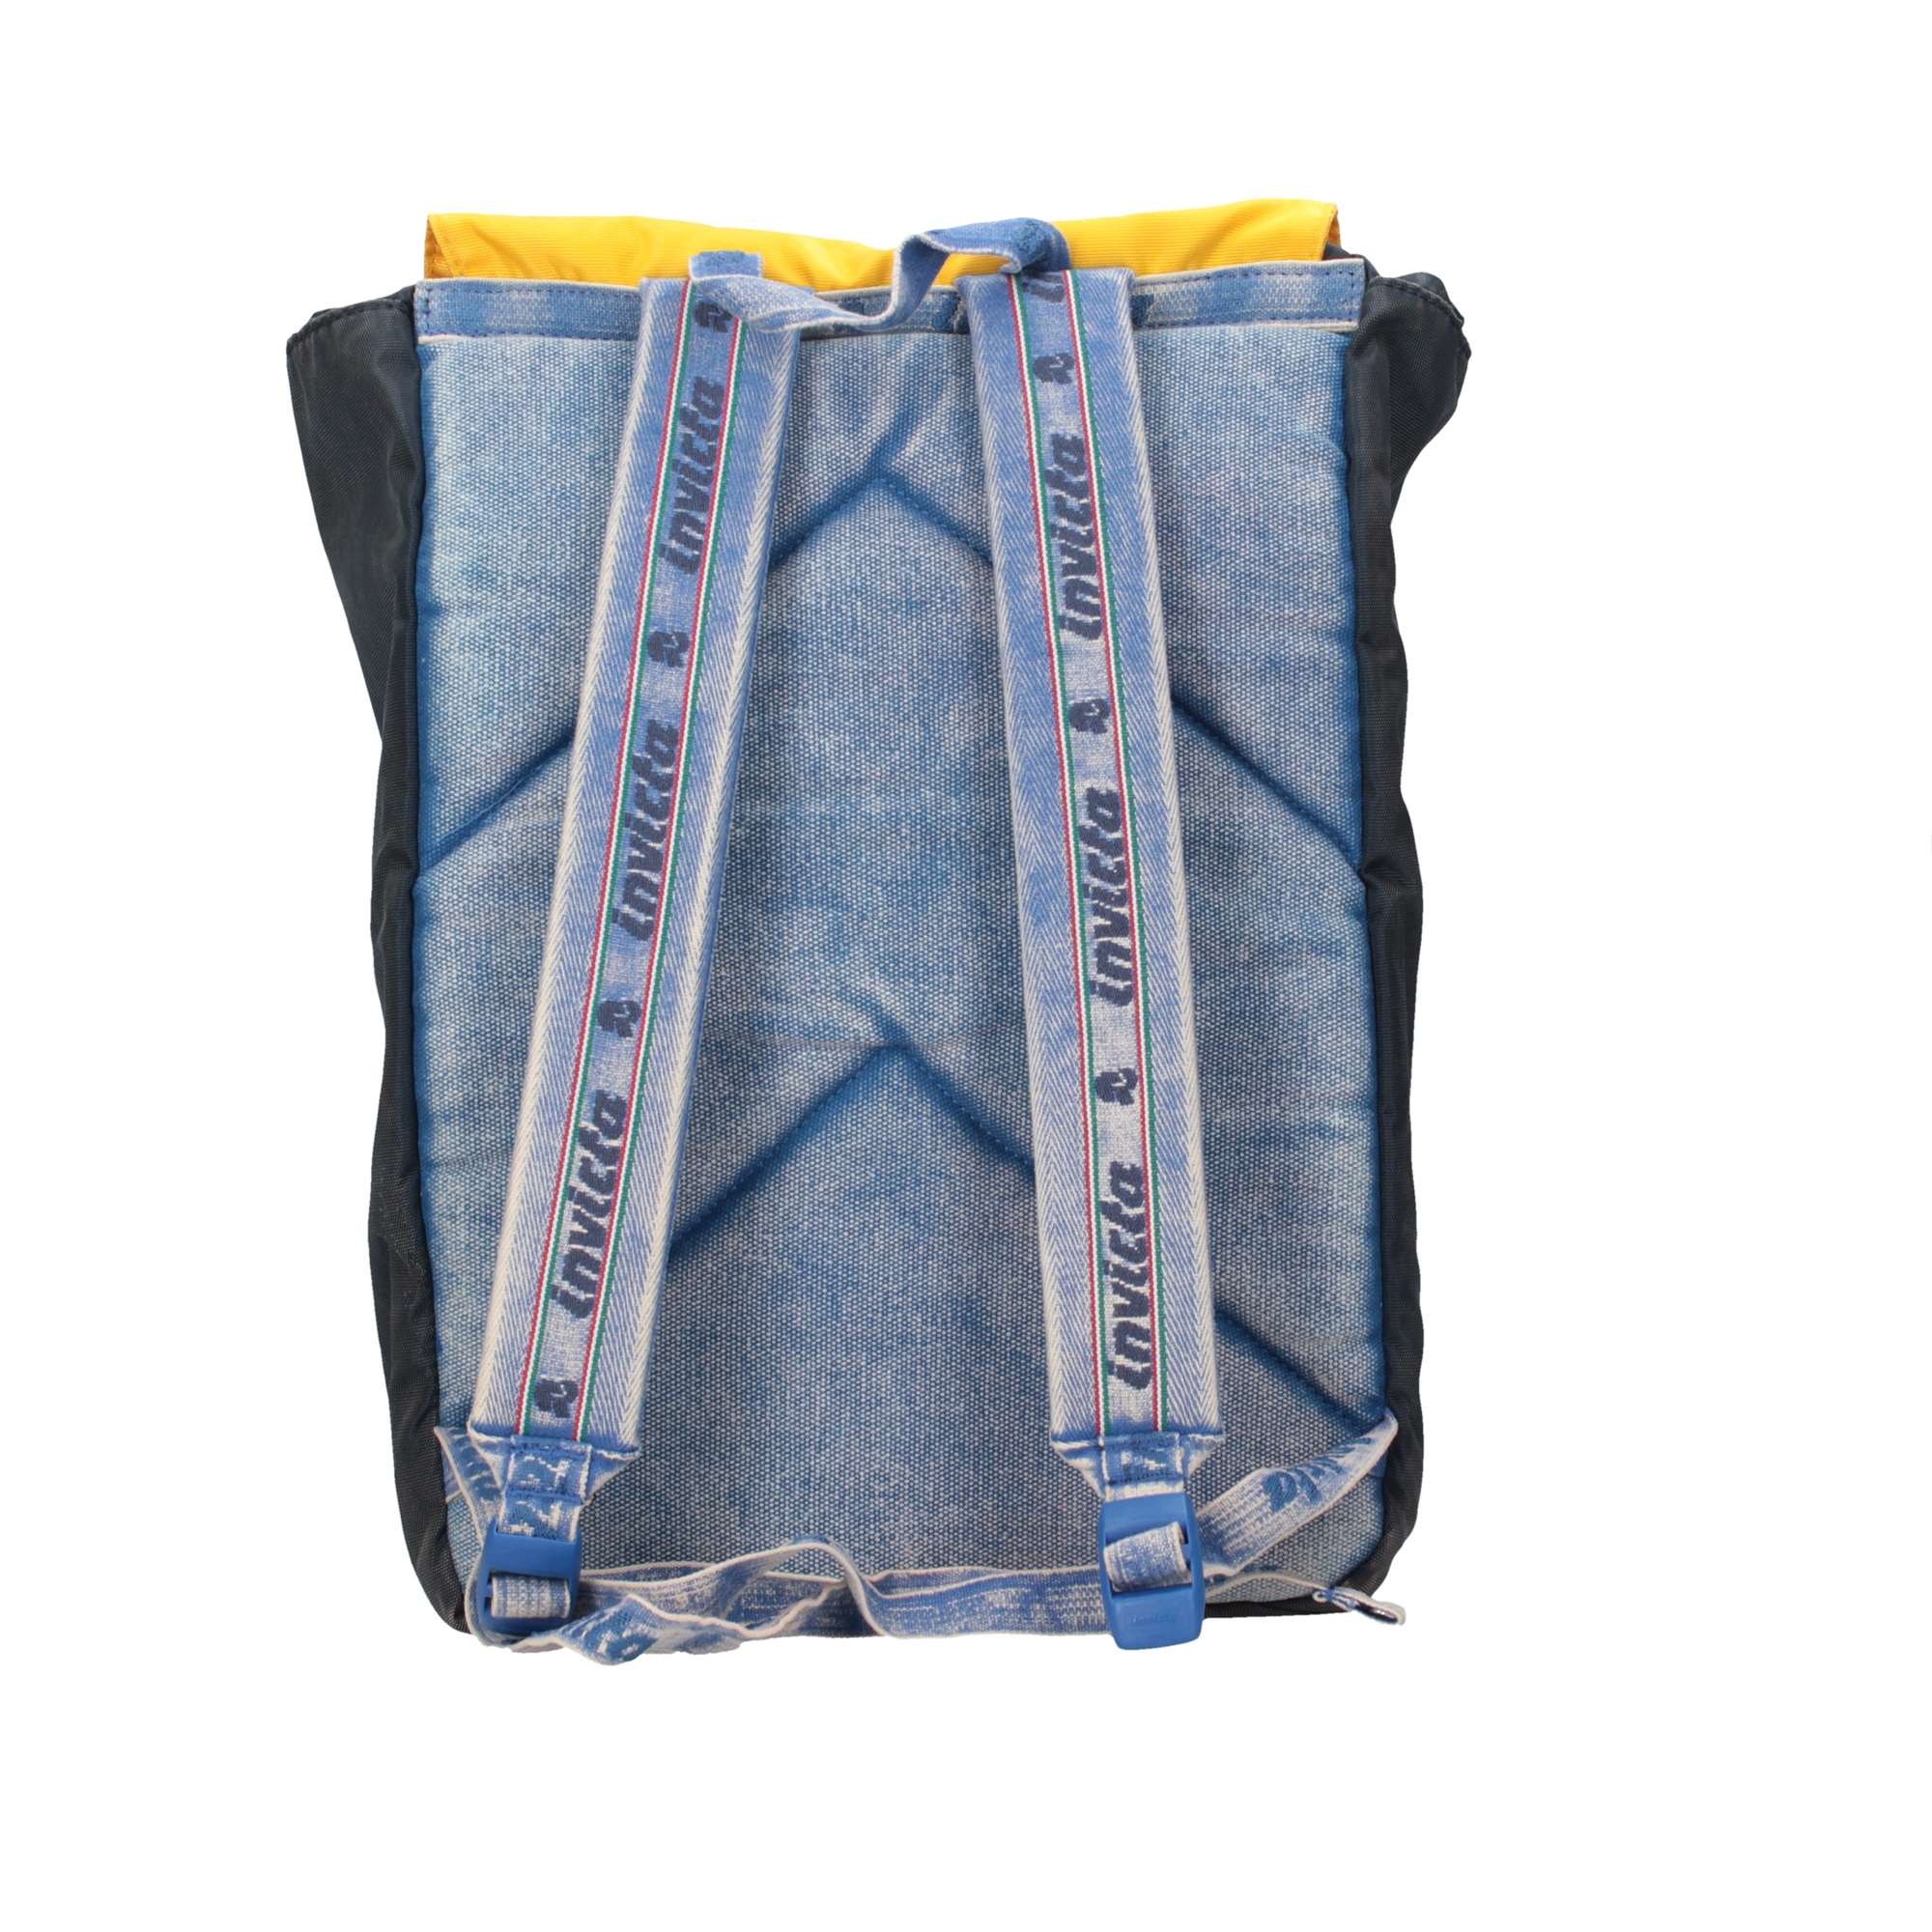 Invicta 4458102-02 Yellow / Blue Bags Man 